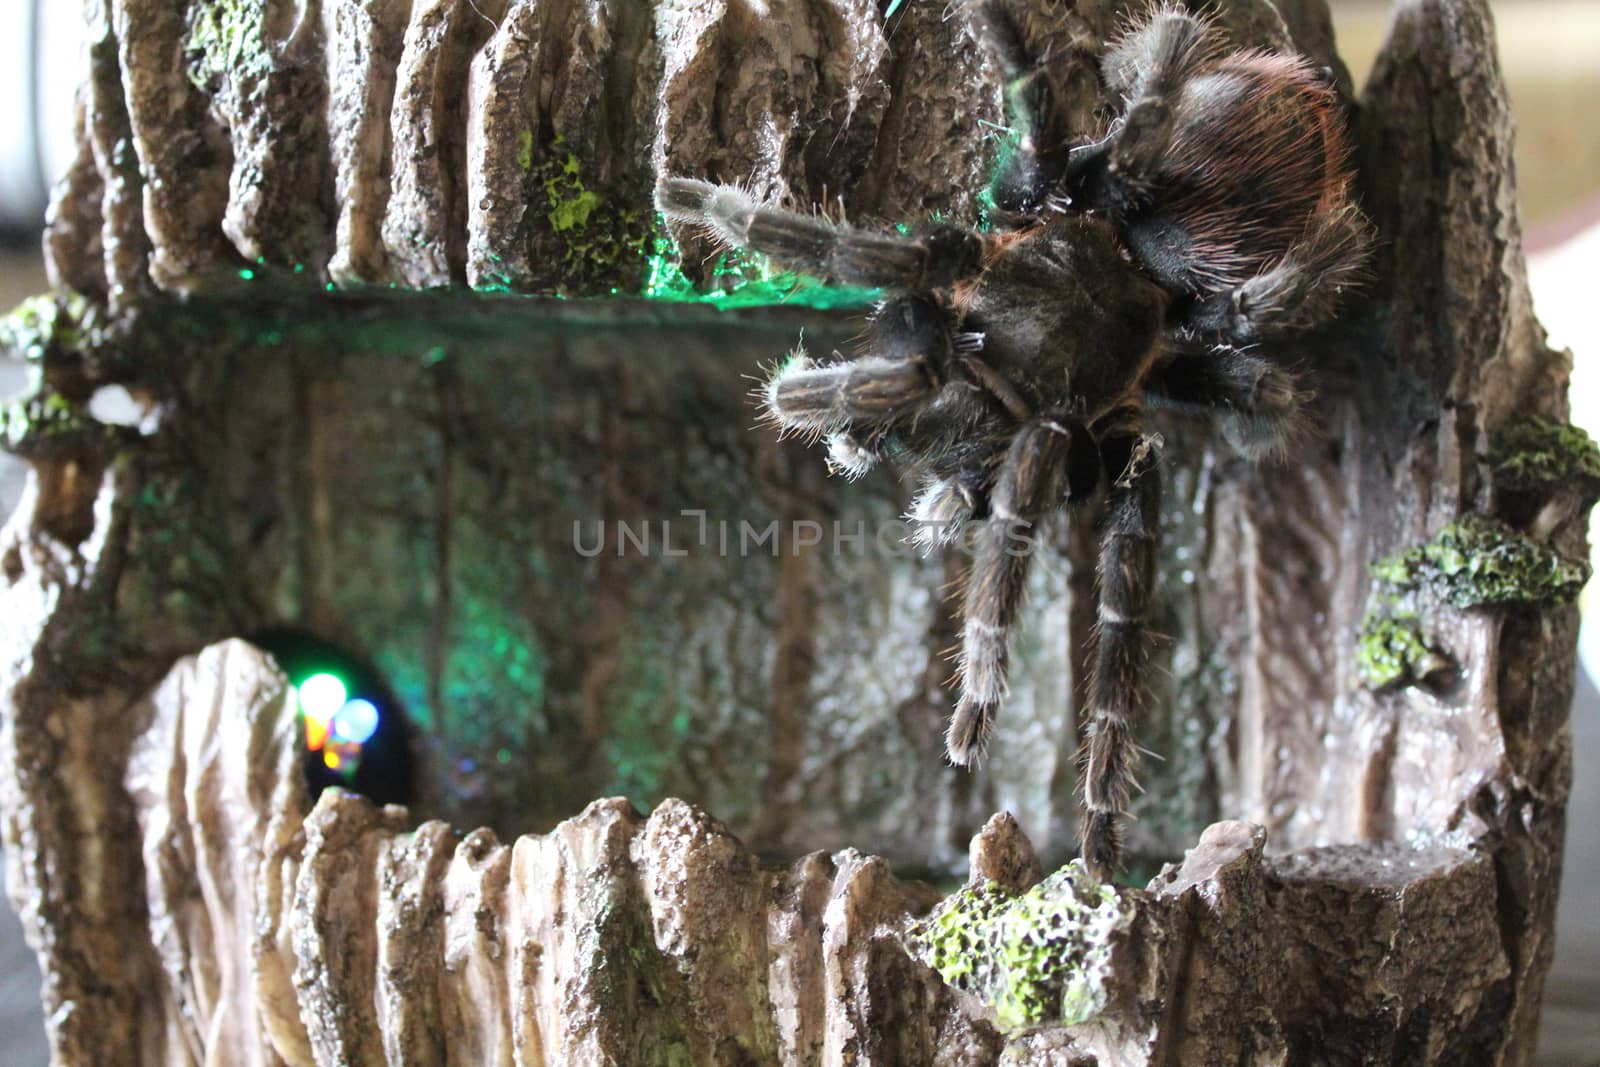 Tarantula in the fountain by SmirMaxStock